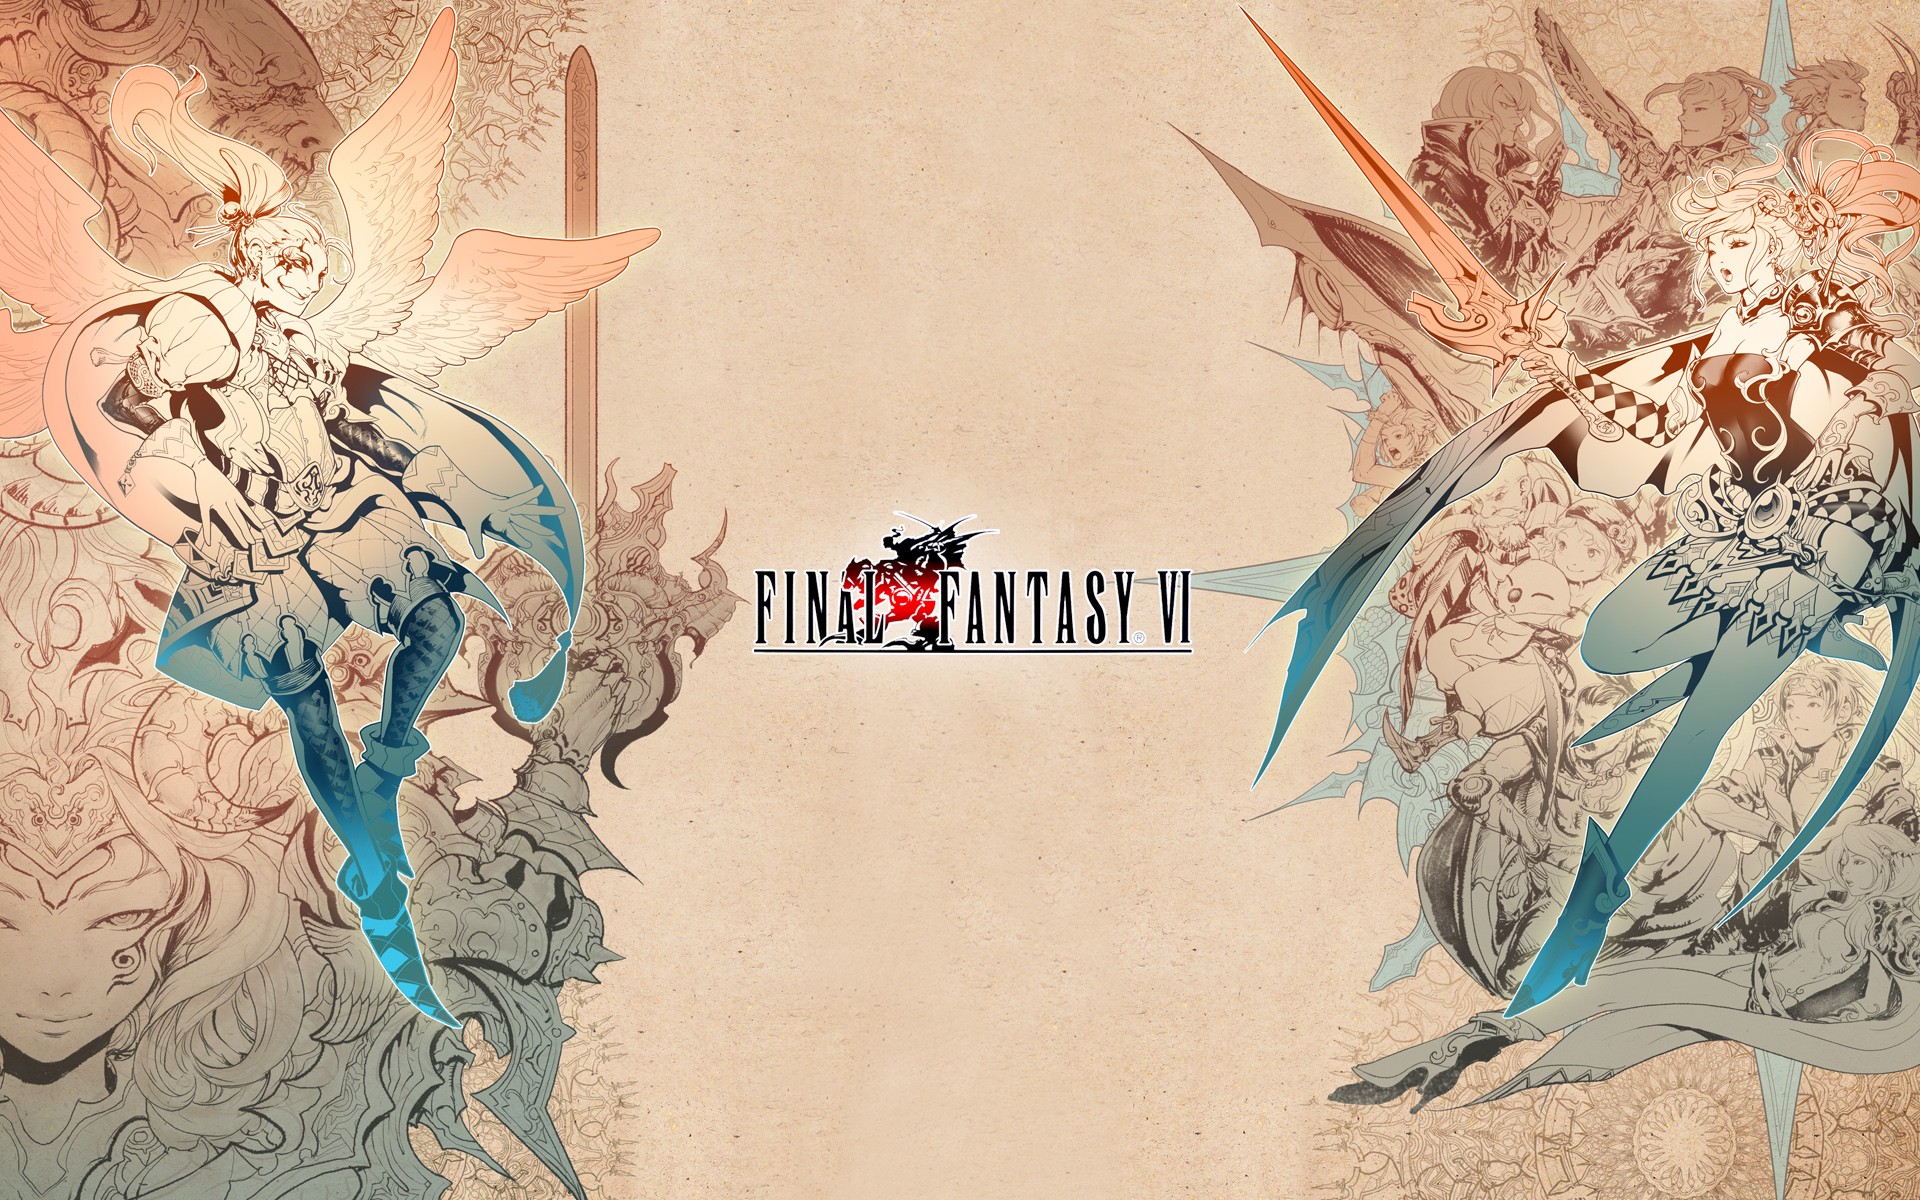 Video games final fantasy final fantasy vi sword wings square enix kefka palazzo terra branford wallpaper